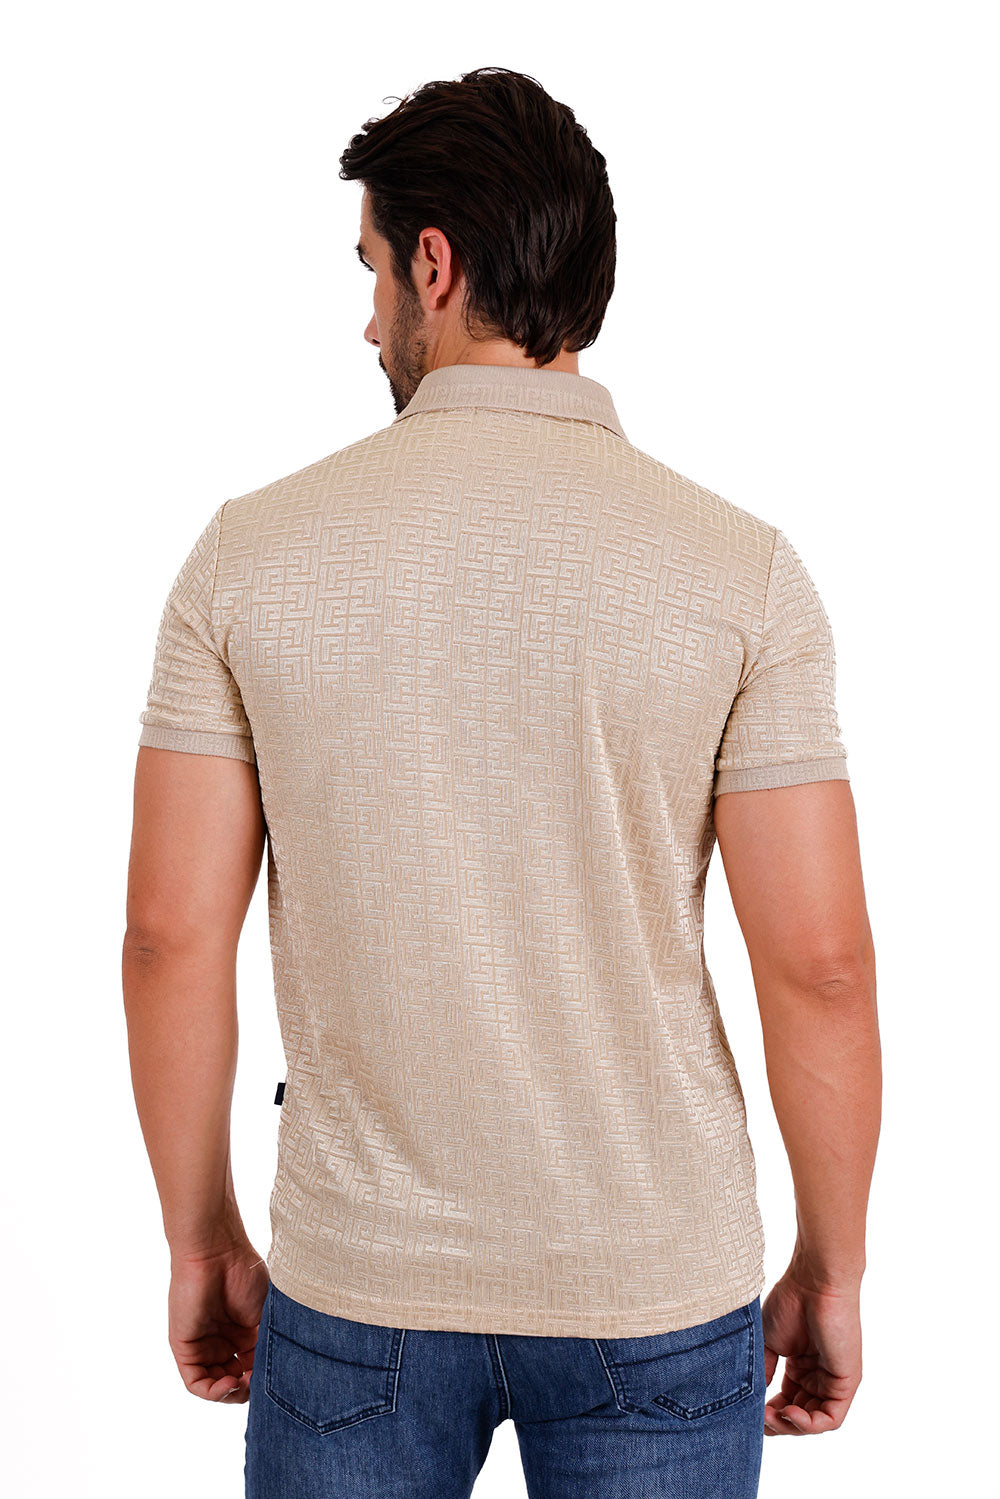 BARABAS Men's Greek Key Pattern Stretch Short Sleeve Polo Shirt 3P10 Beige